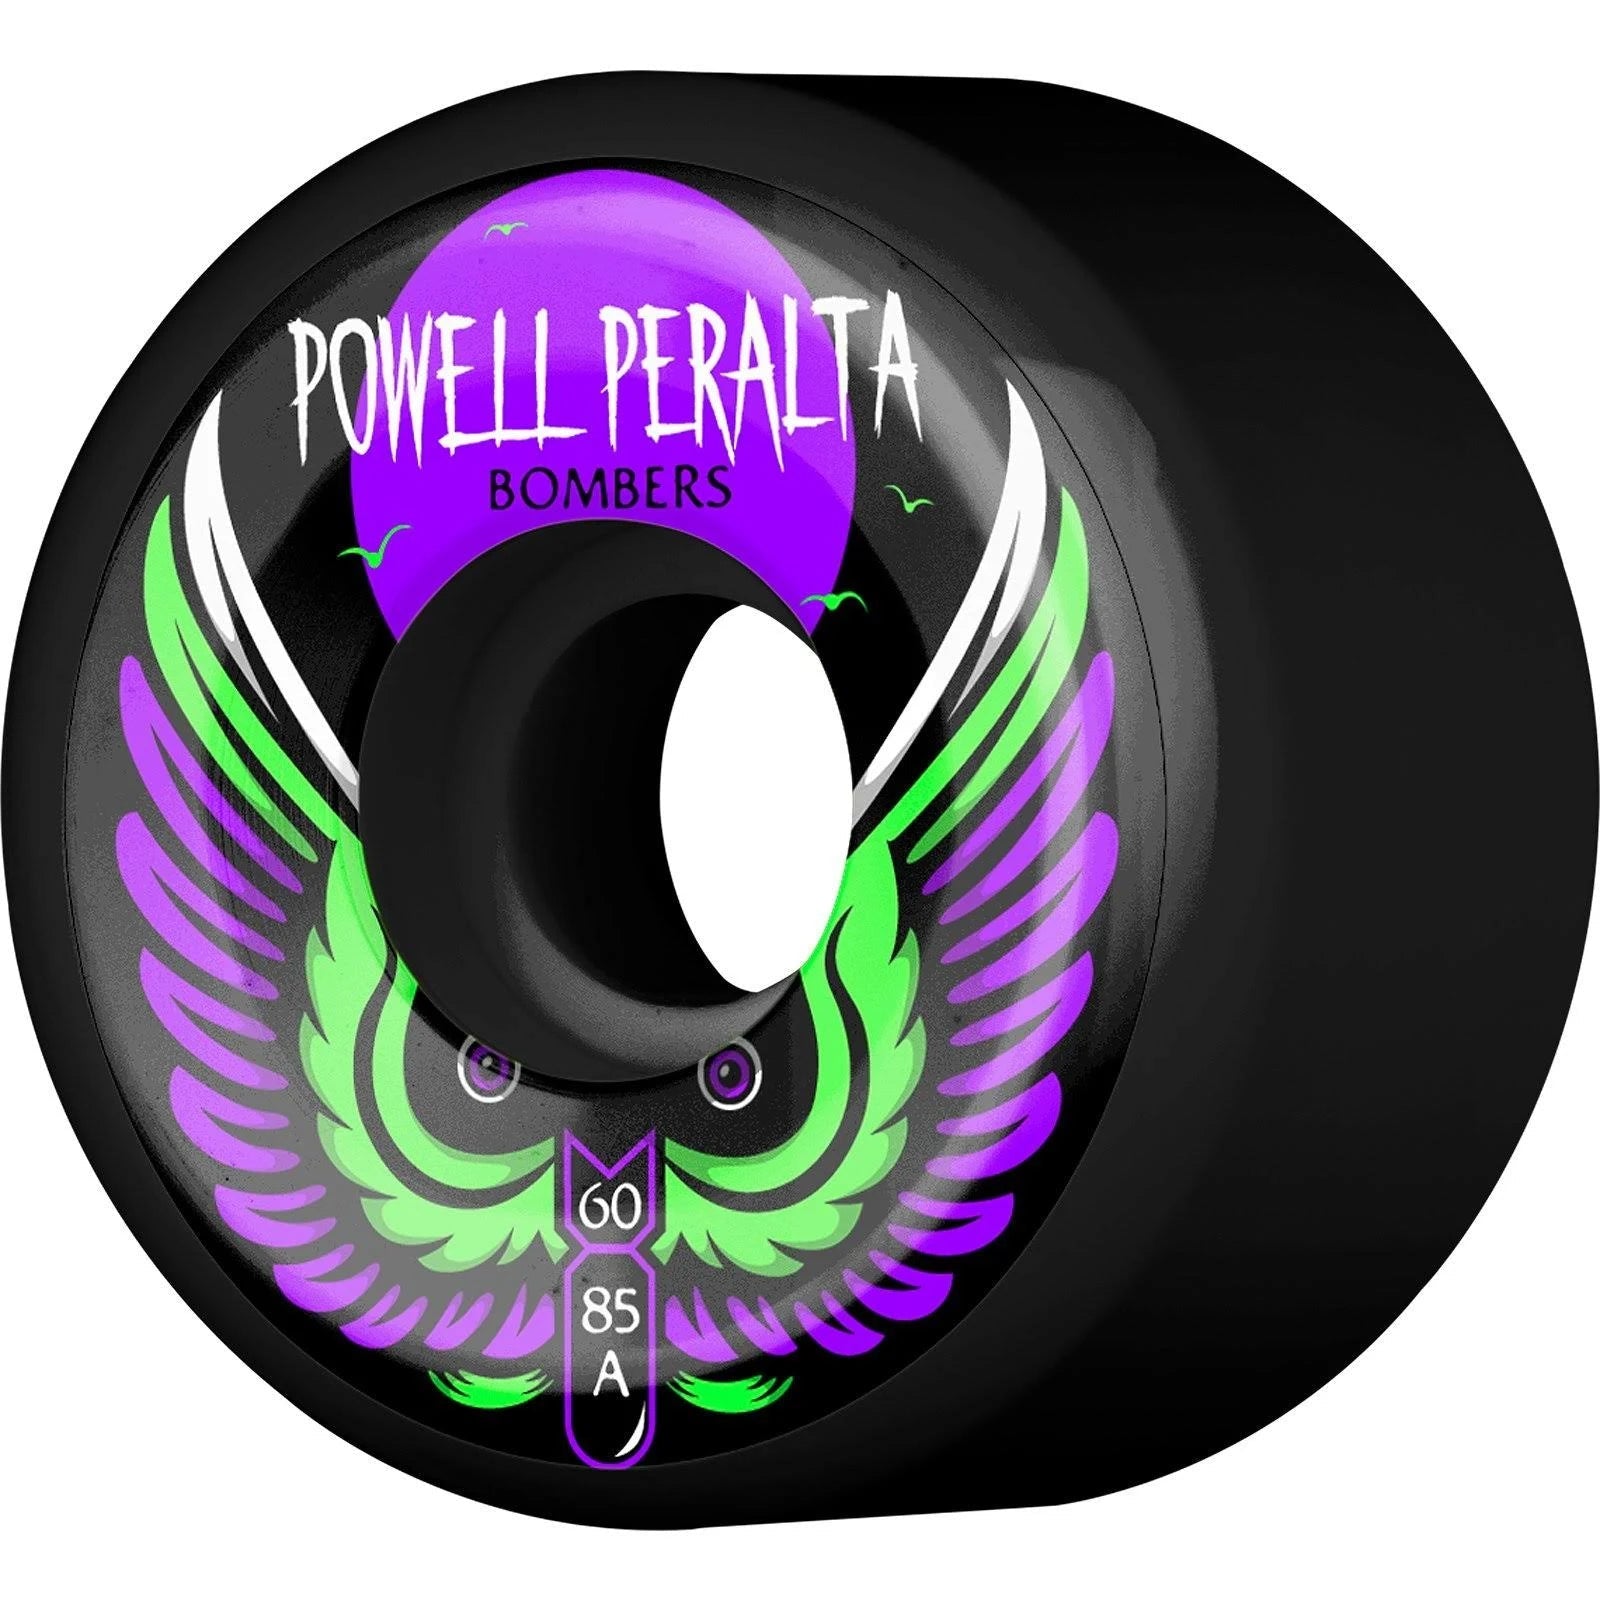 Powell Peralta Bombers III Wheels Black 85A 60MM wheels Powell Peralta 